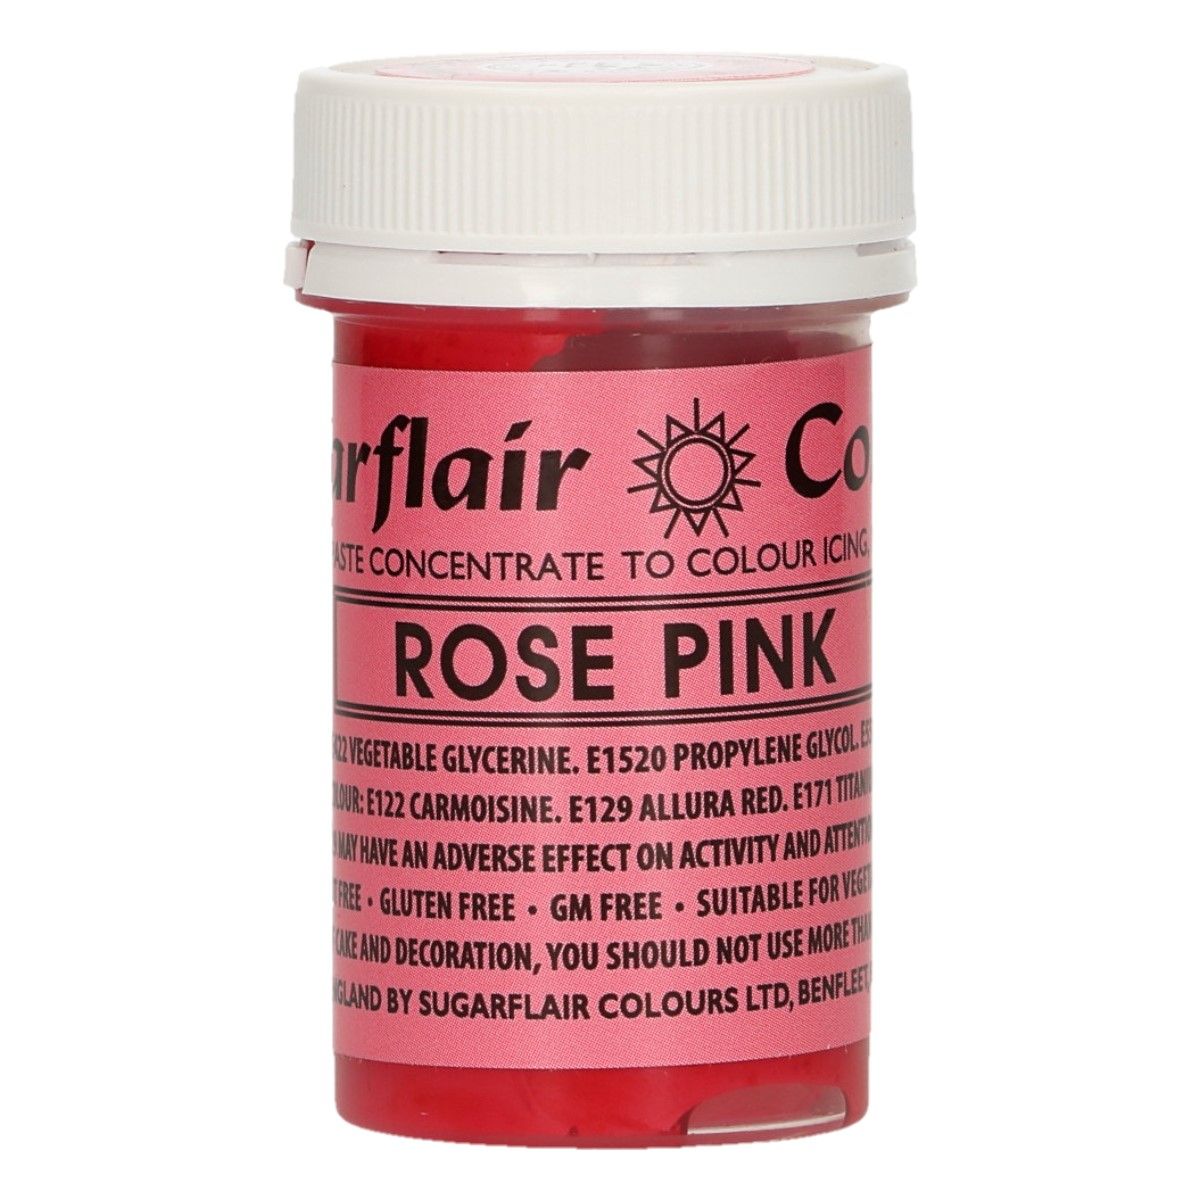  Foto: Colorante sugarflair paste rose pink 25 gr